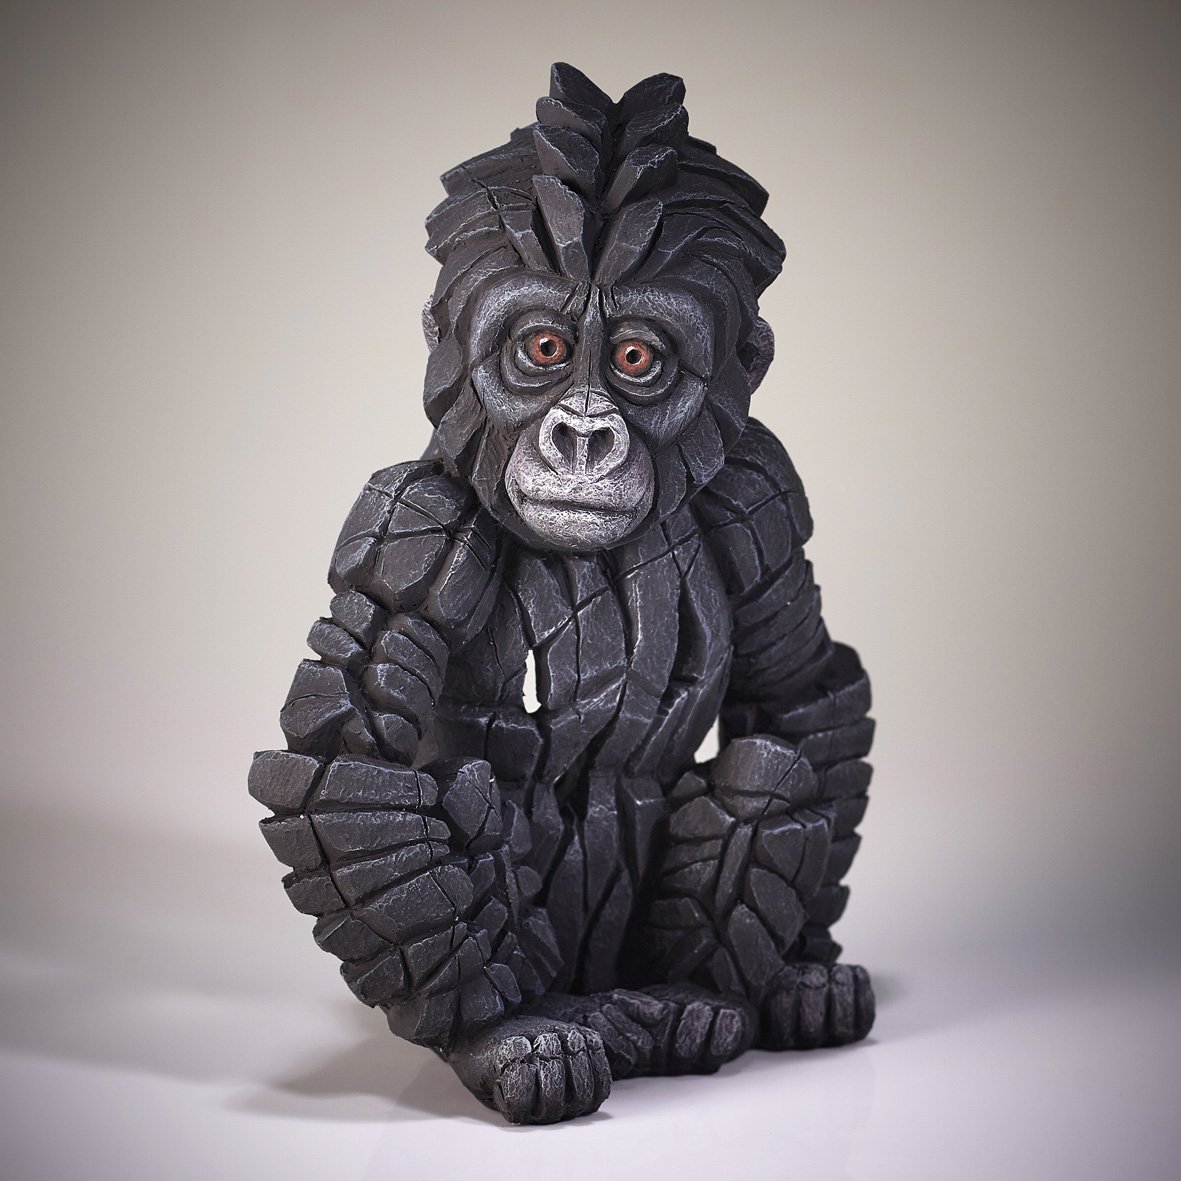 edge-baby-gorilla-sculpture-by-matt-buckley